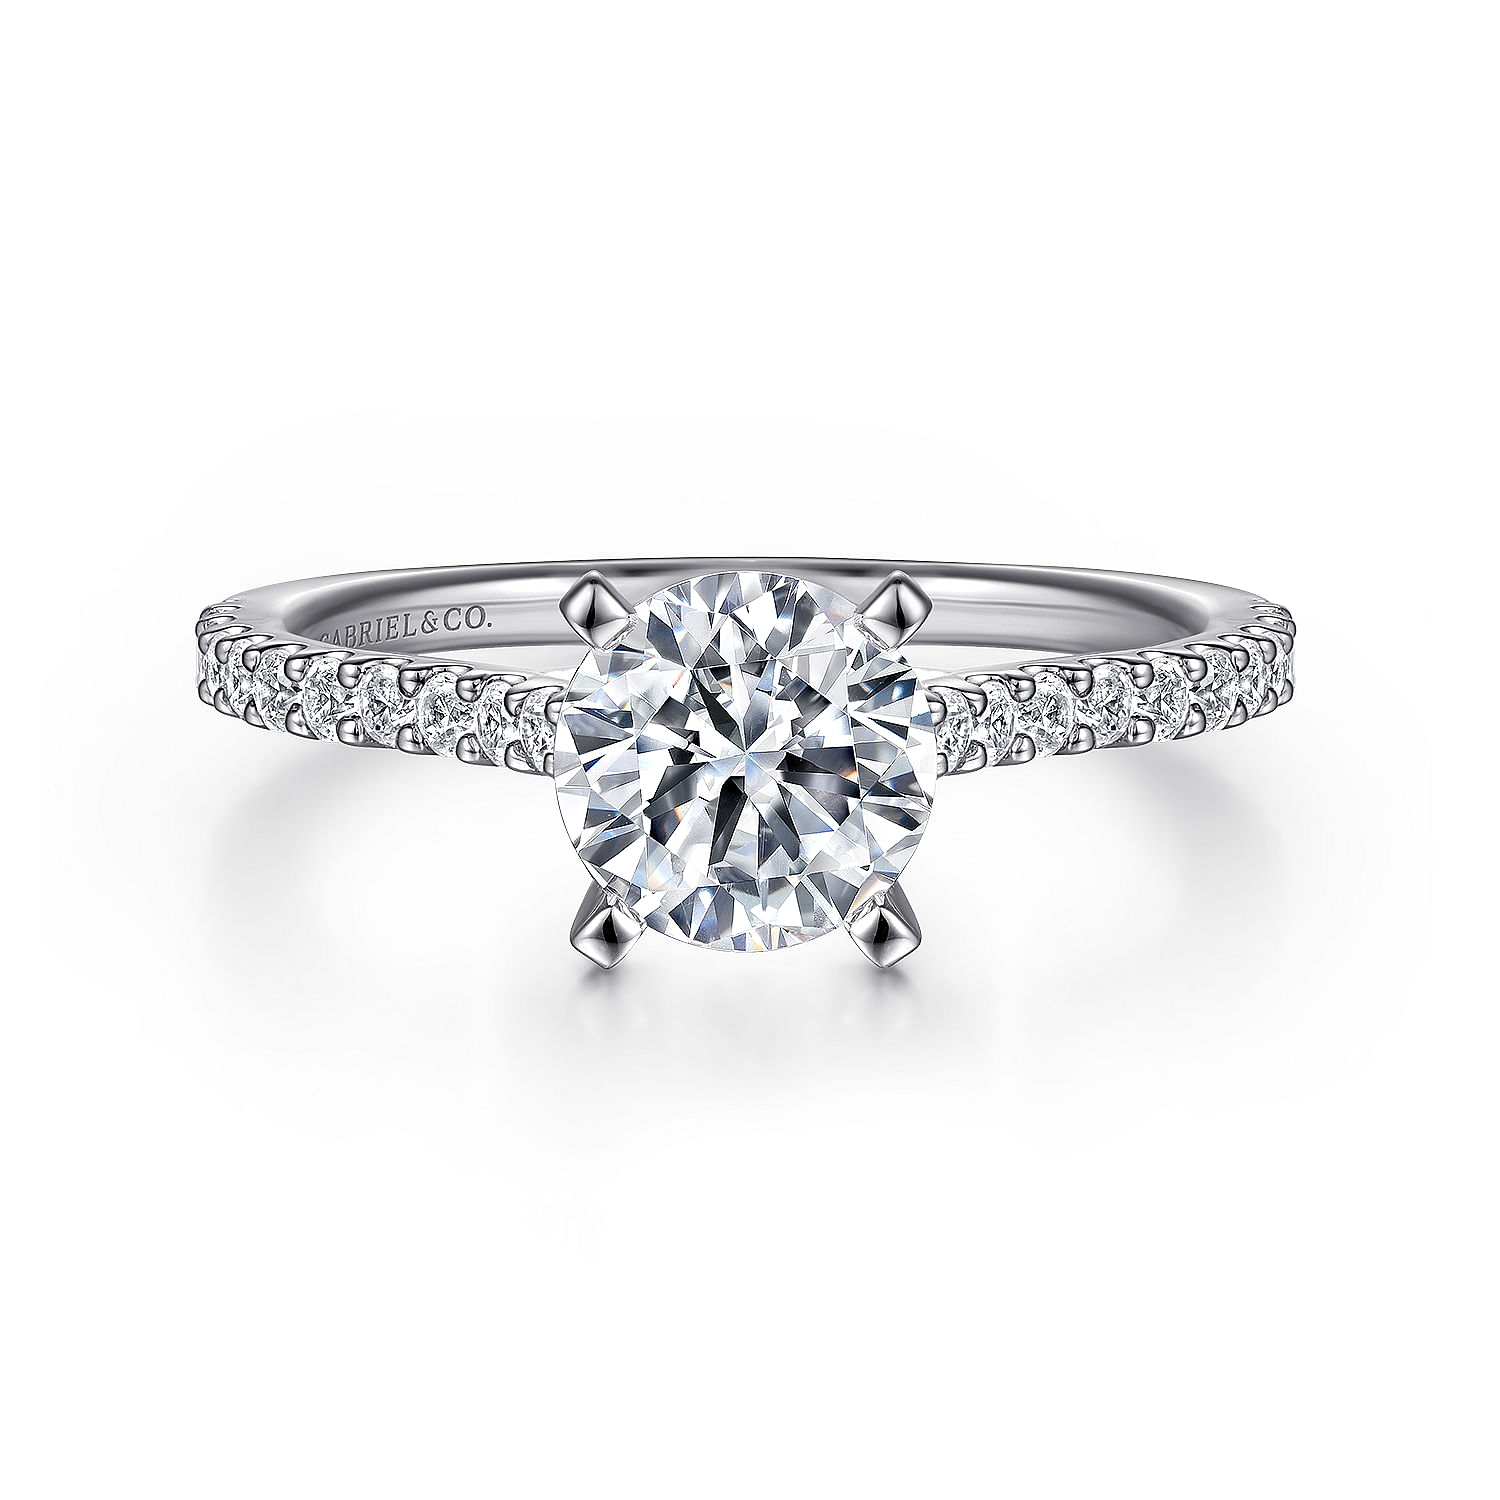 Shanna---14K-White-Gold-Round-Diamond-Engagement-Ring1